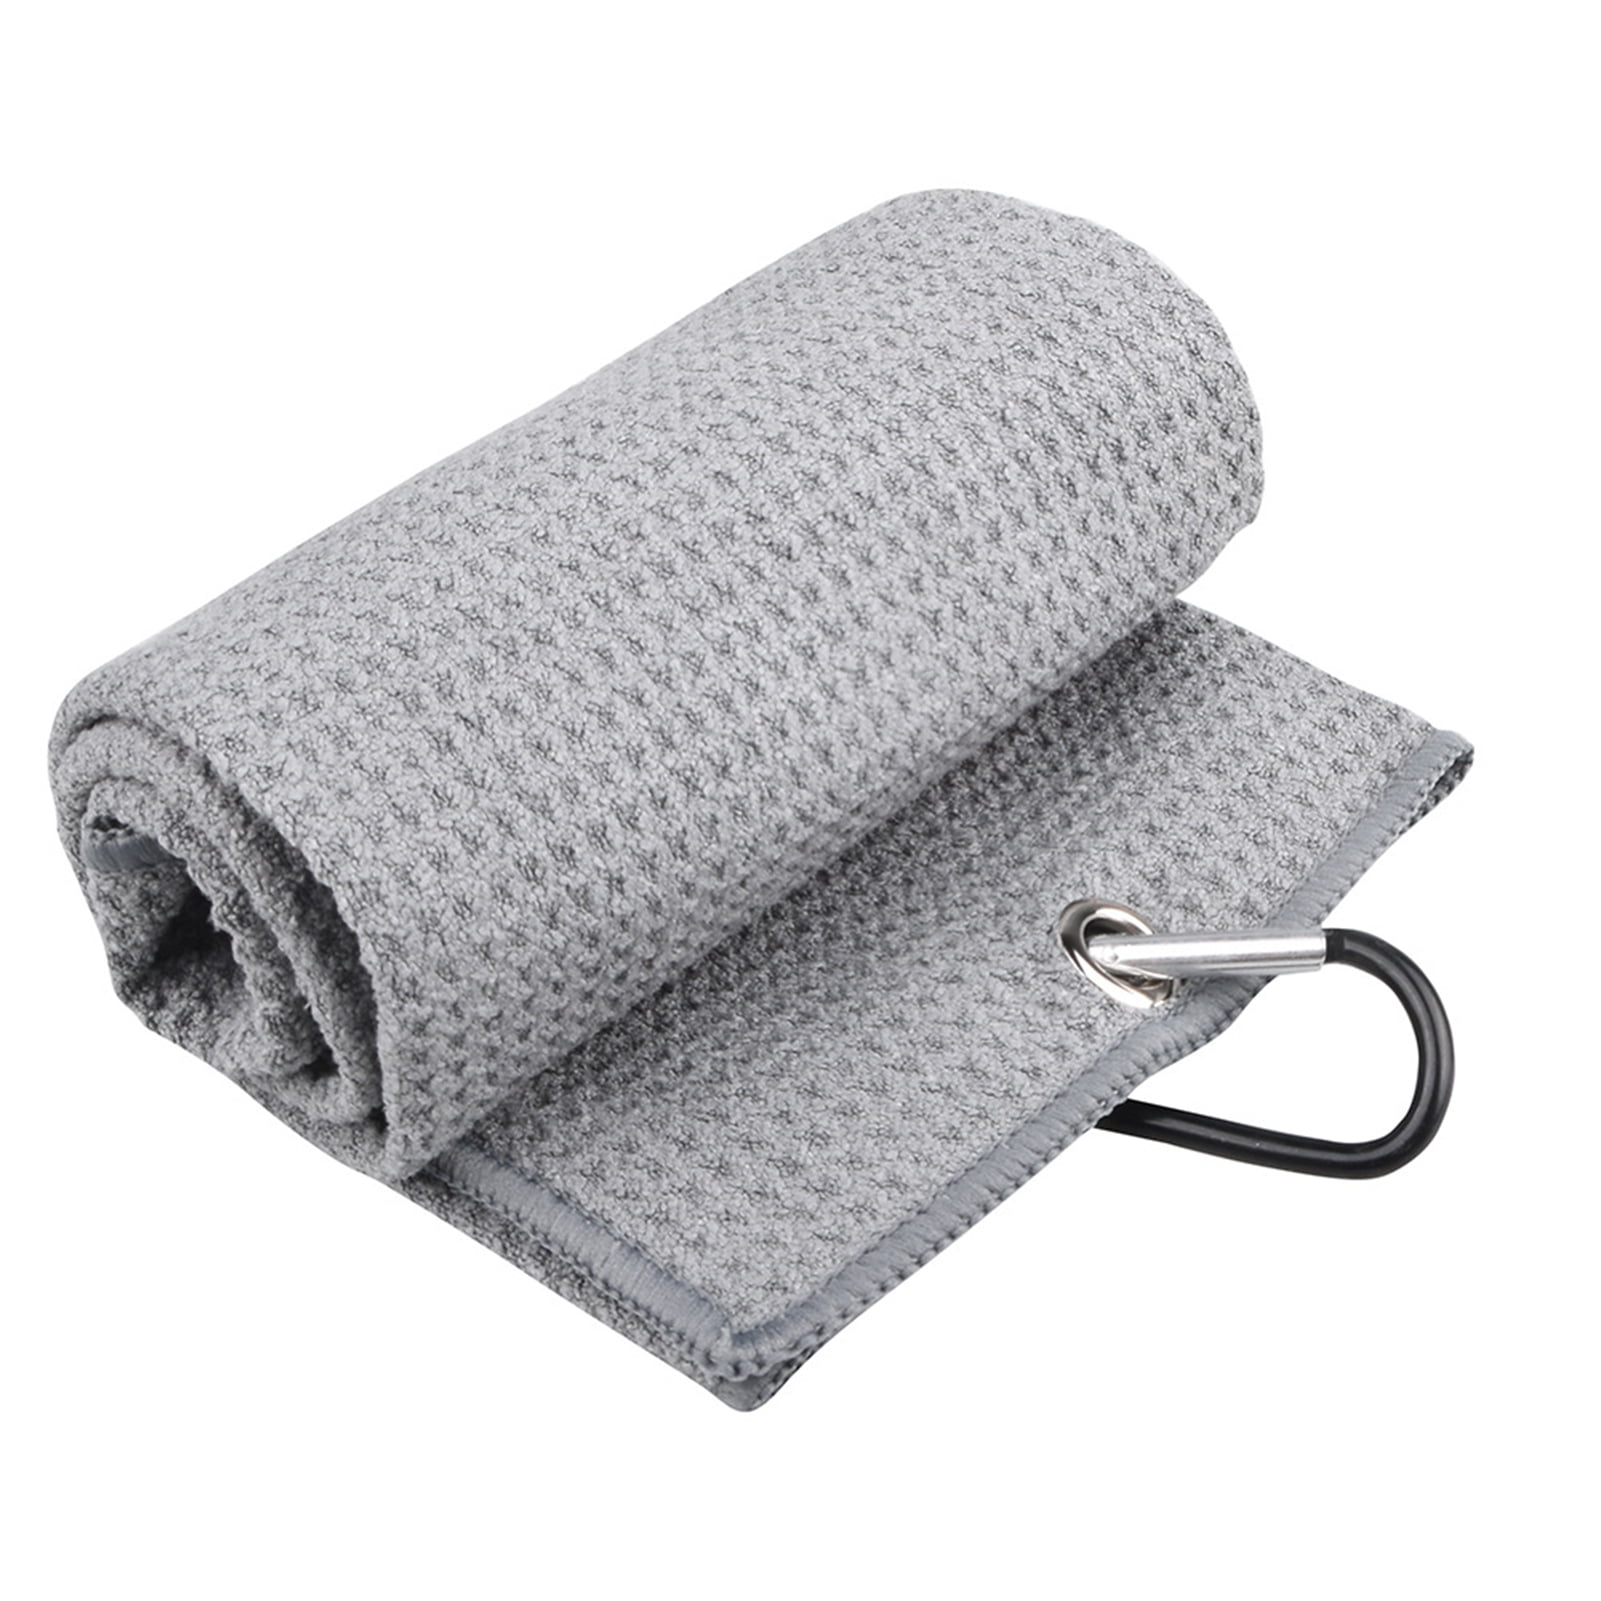 IMPRESA Bowling Ball Towel 2 Pack 10 x 8 Inch Microfiber Bowling Shammy Pad EZ 